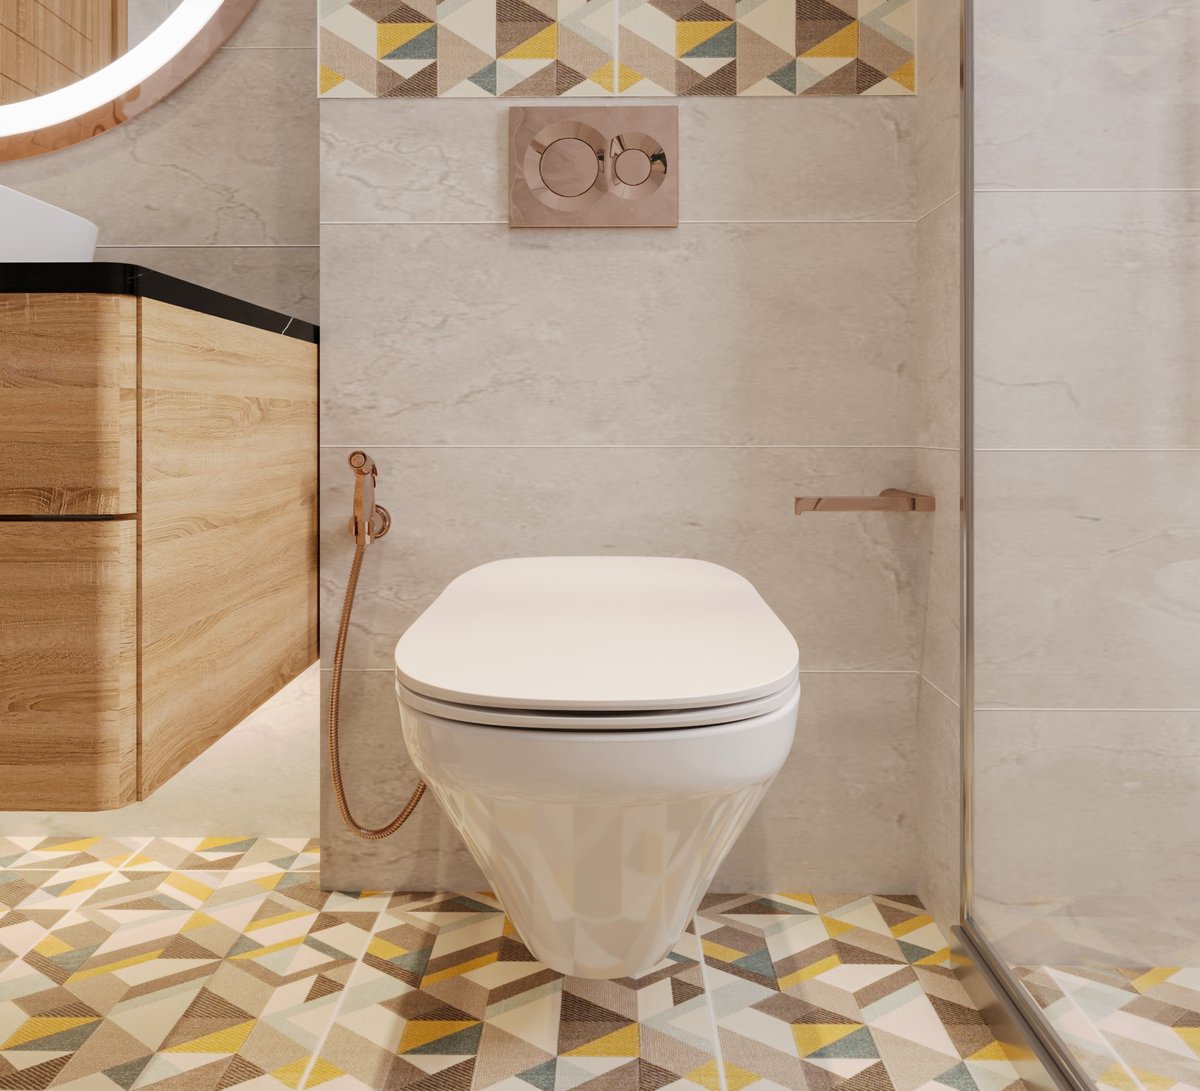 Imagine a bathroom that makes you feel like walking into an art gallery. That's what the magic of #KohlerBoldLook is all about. Take a look at this wonderful setup. #Kohler #KohlerIndia #BathroomDecor #DecorInspo #LuxurySpaces #LuxuryLifestyle #BathroomDesign #HomeDecor